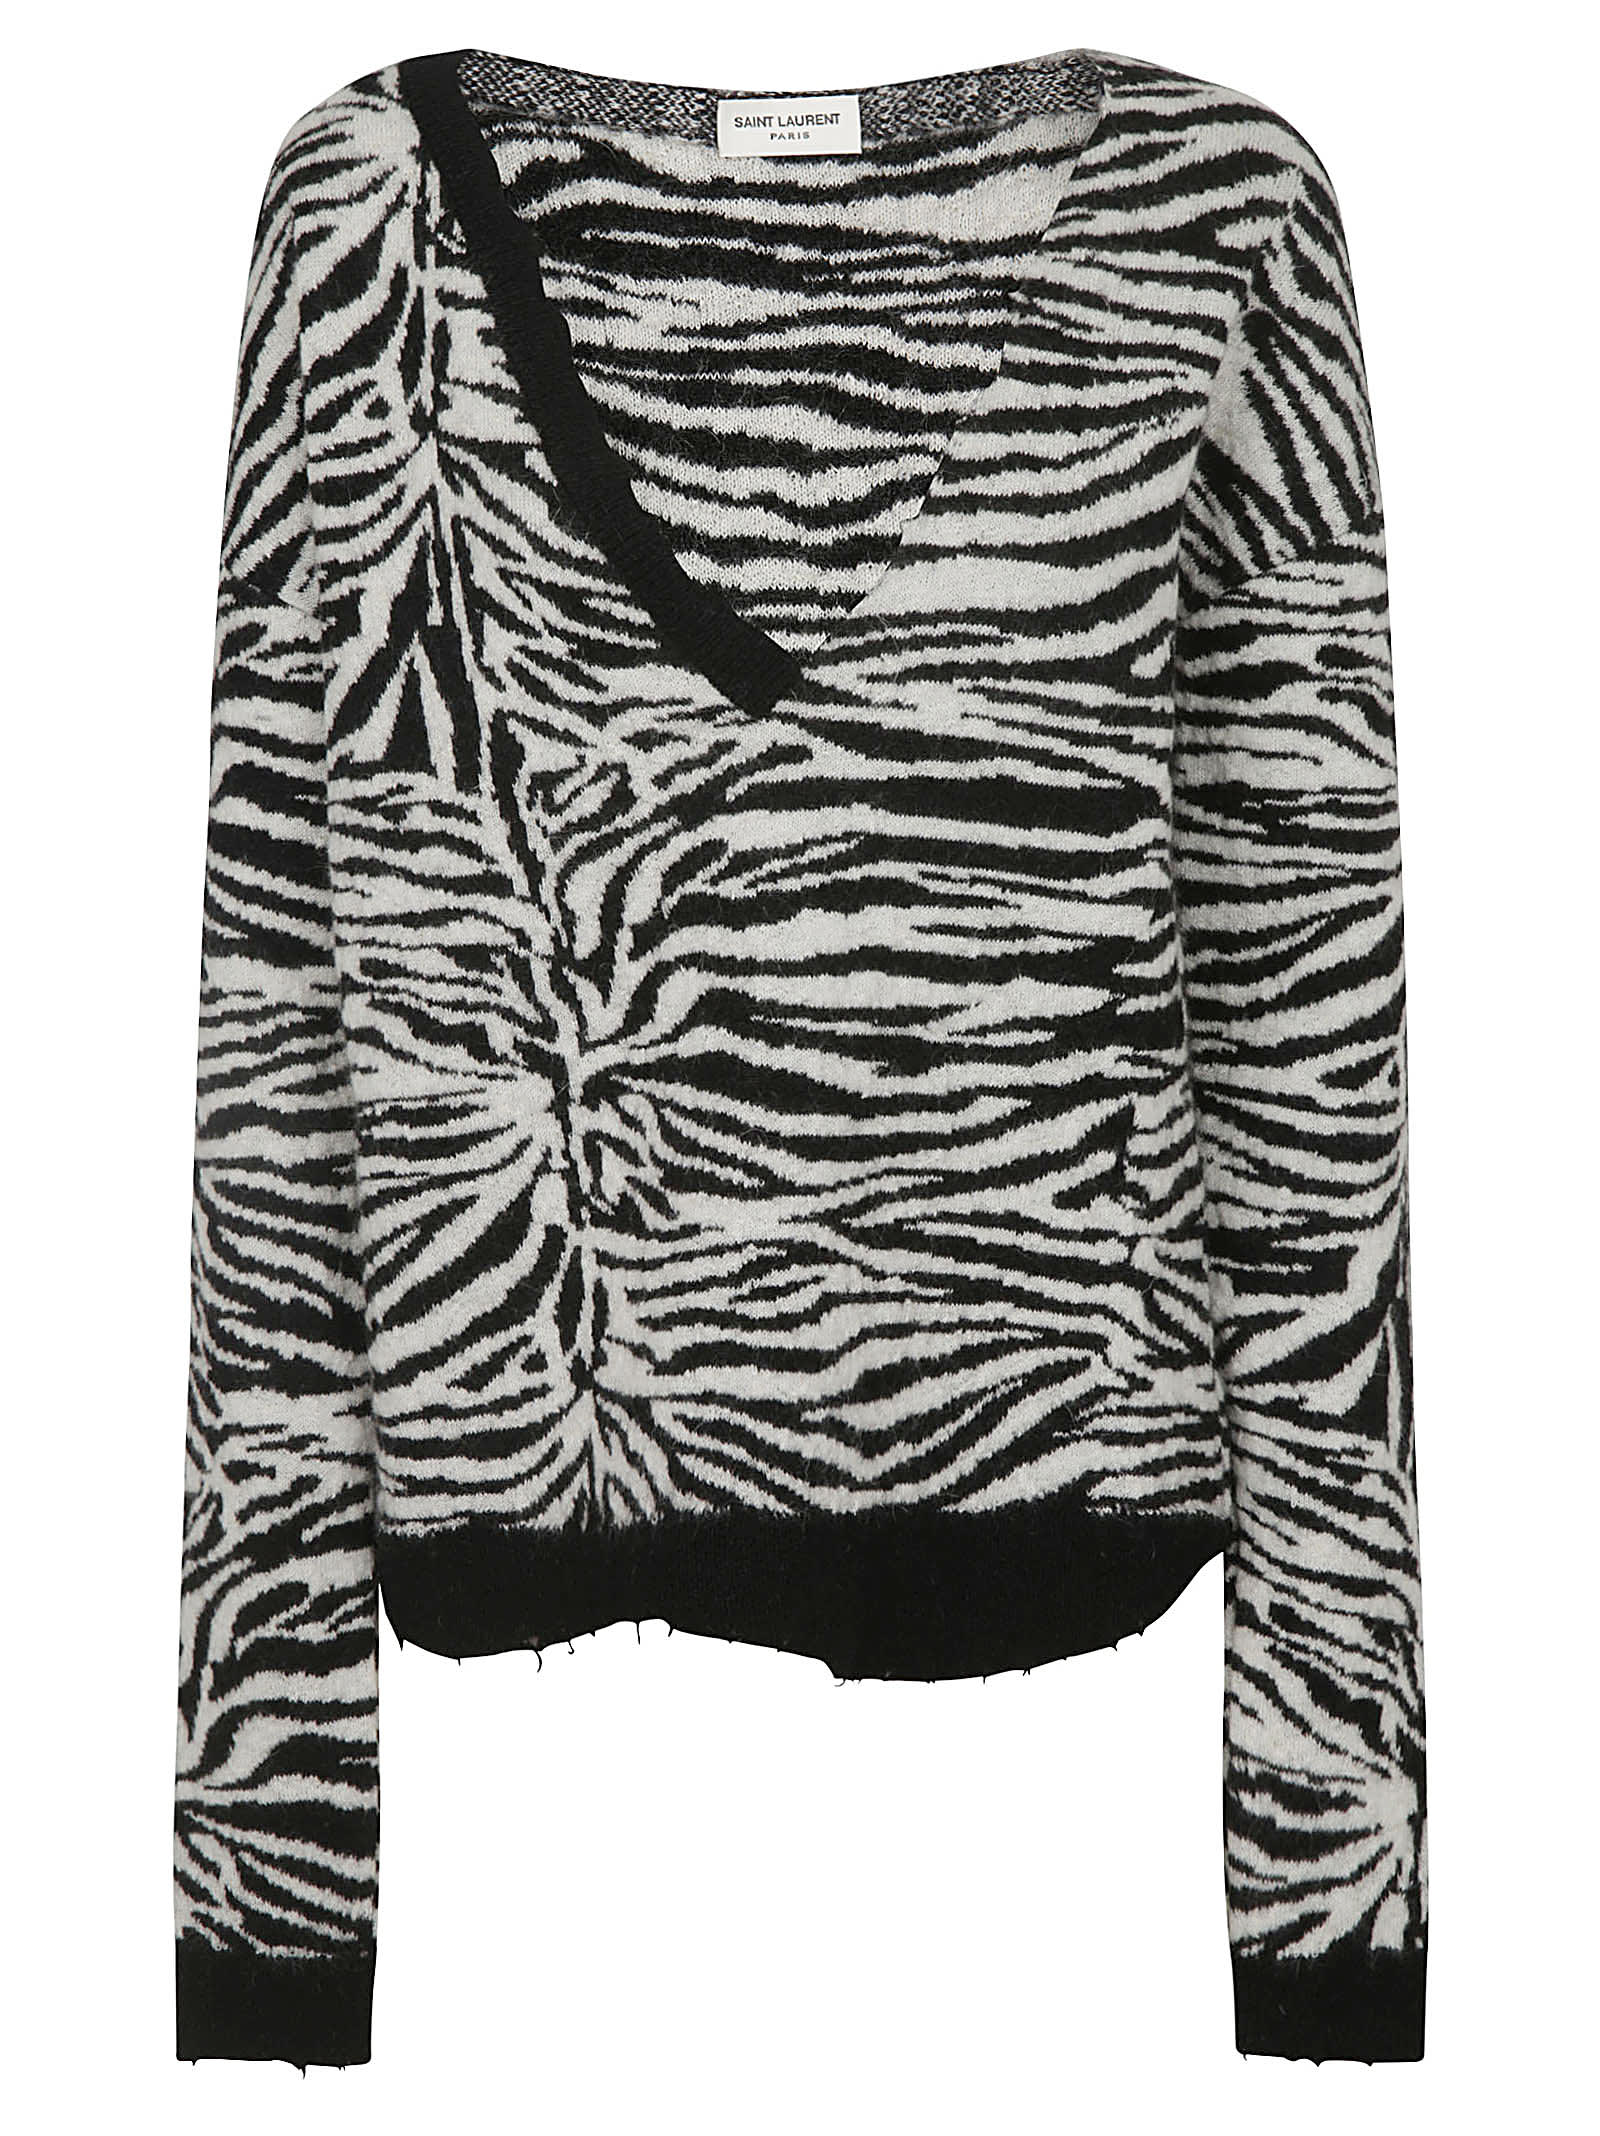 Saint Laurent Mini Jacquard Zebra Sweater